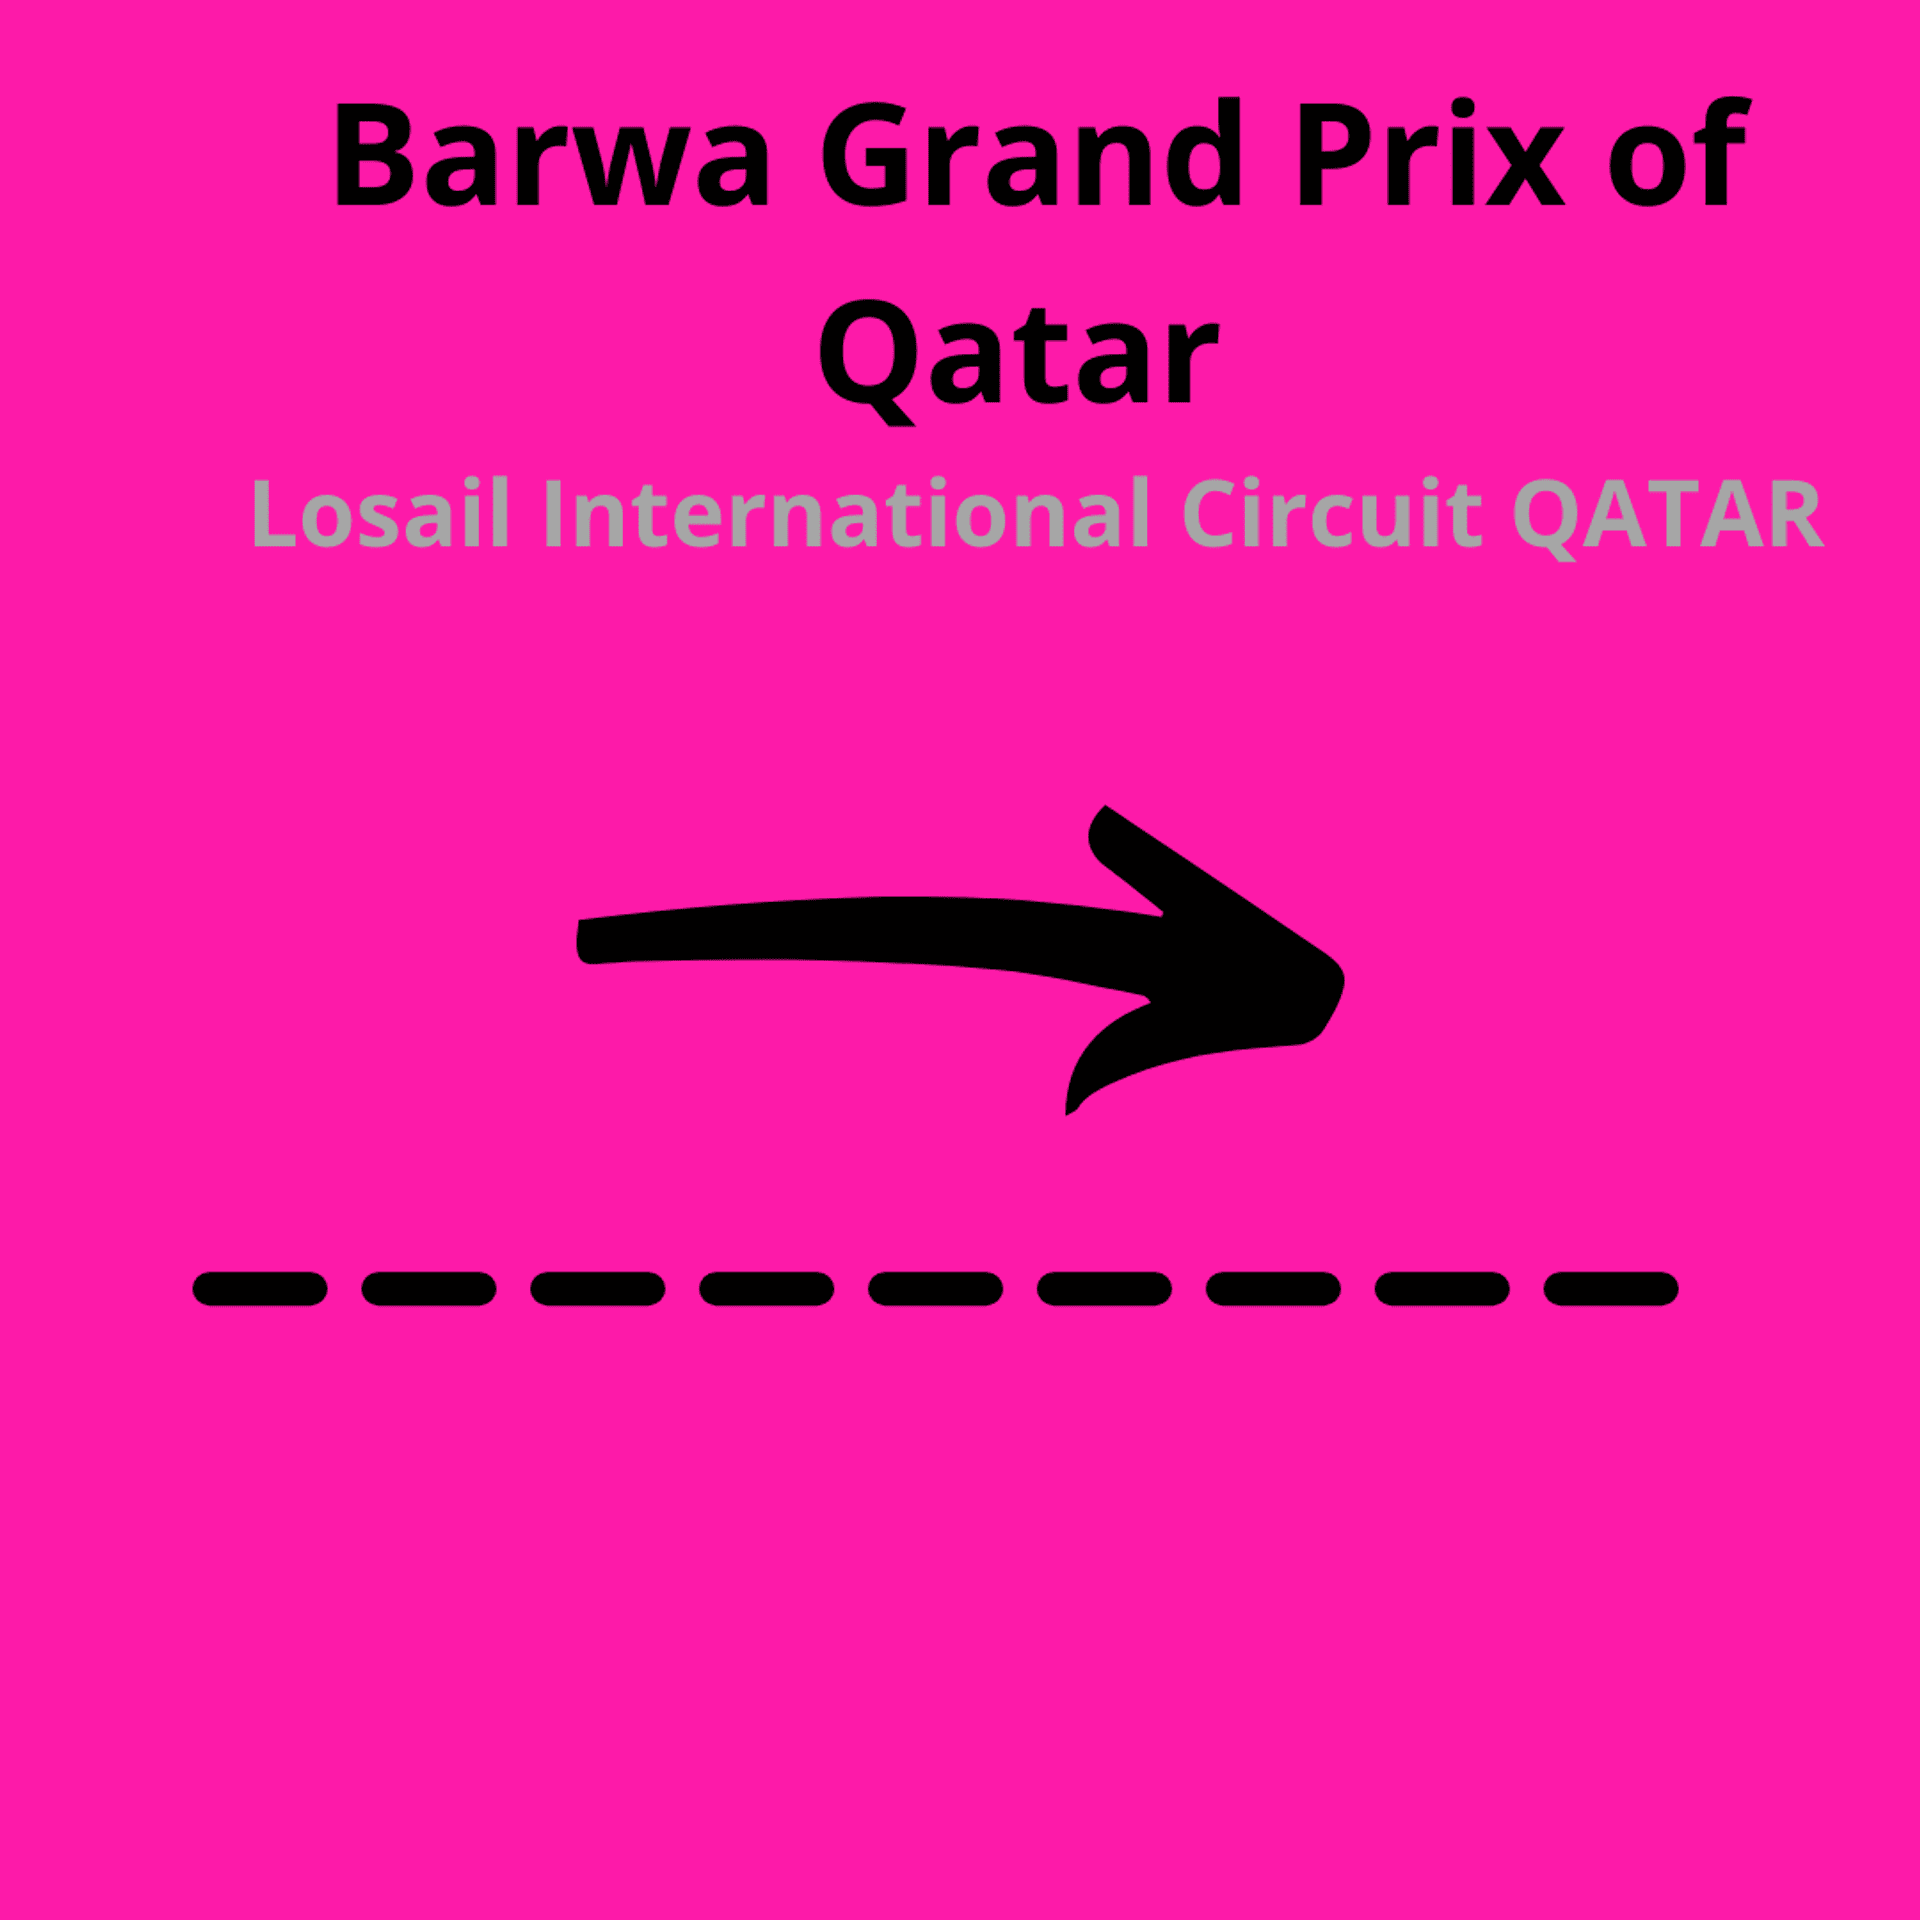 Qatar Losail International Circuit